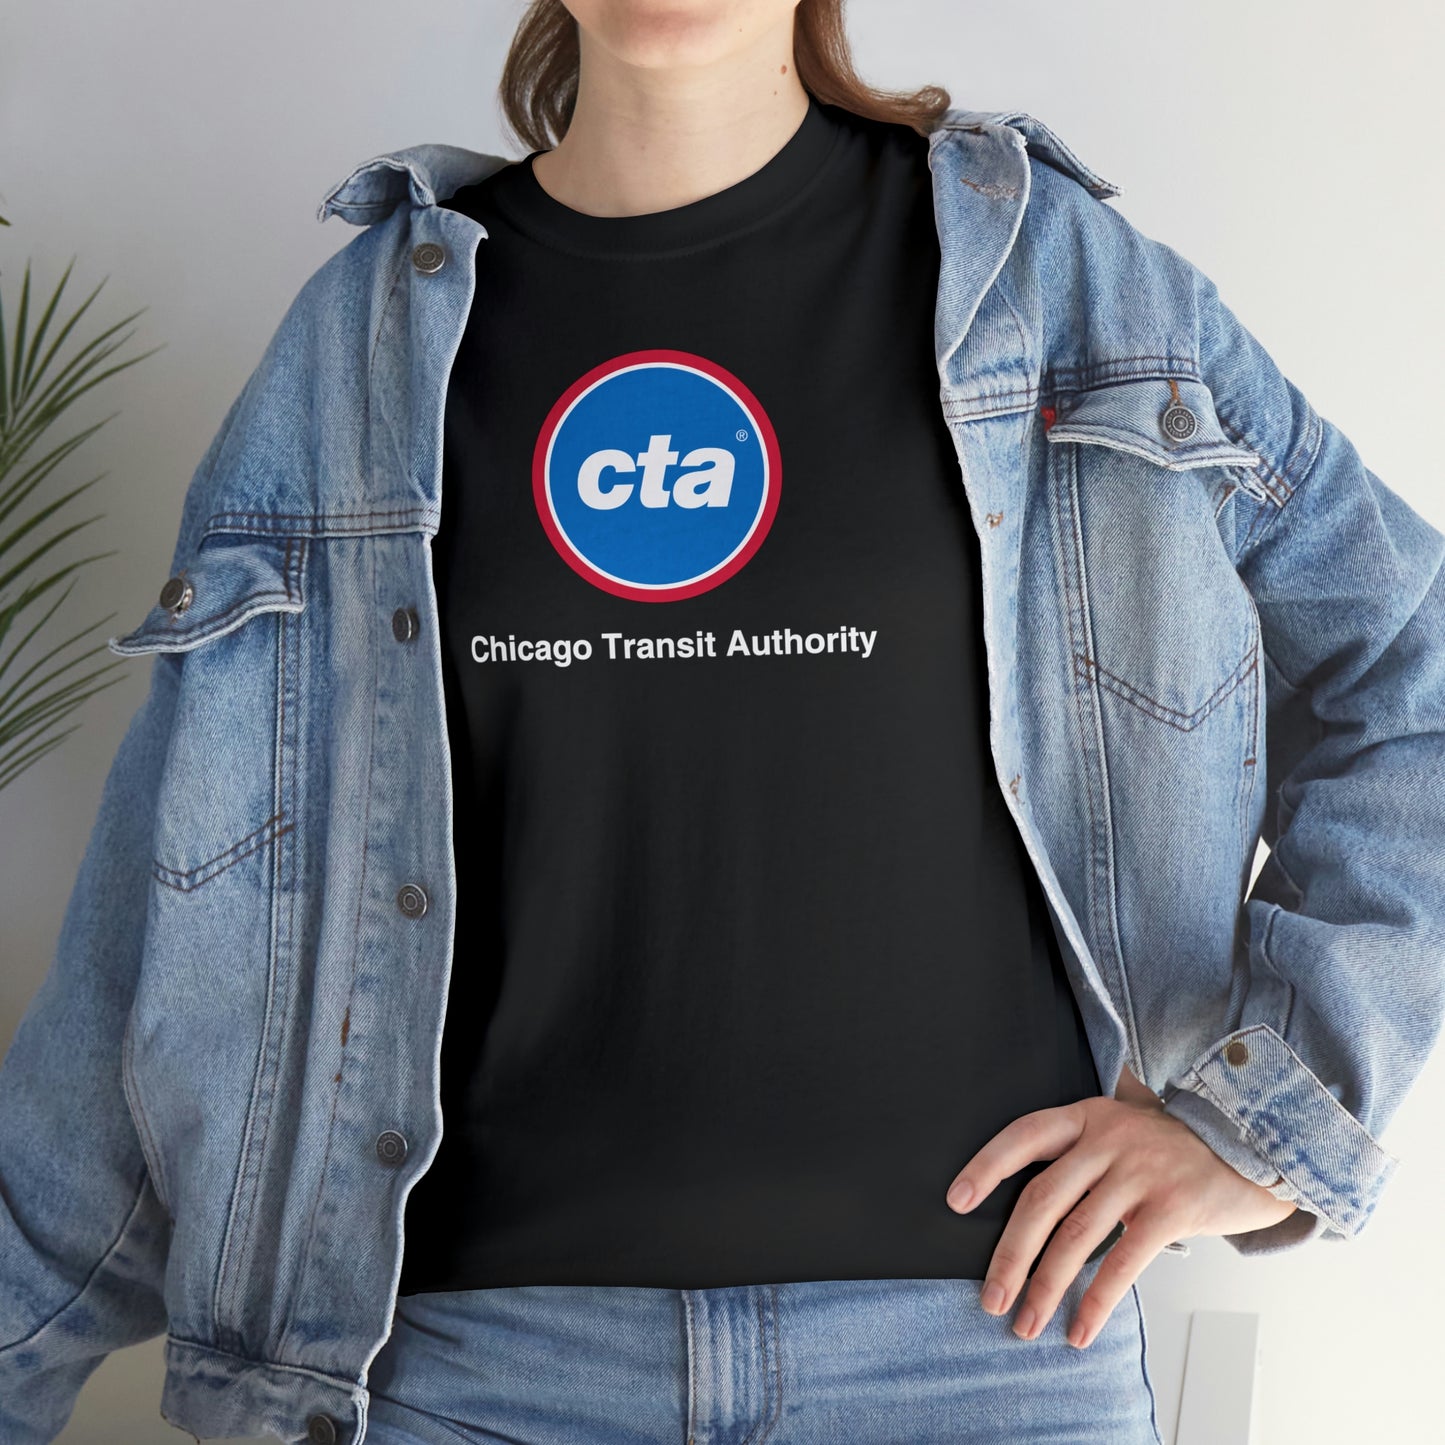 Chicago Transit Authority T-Shirt